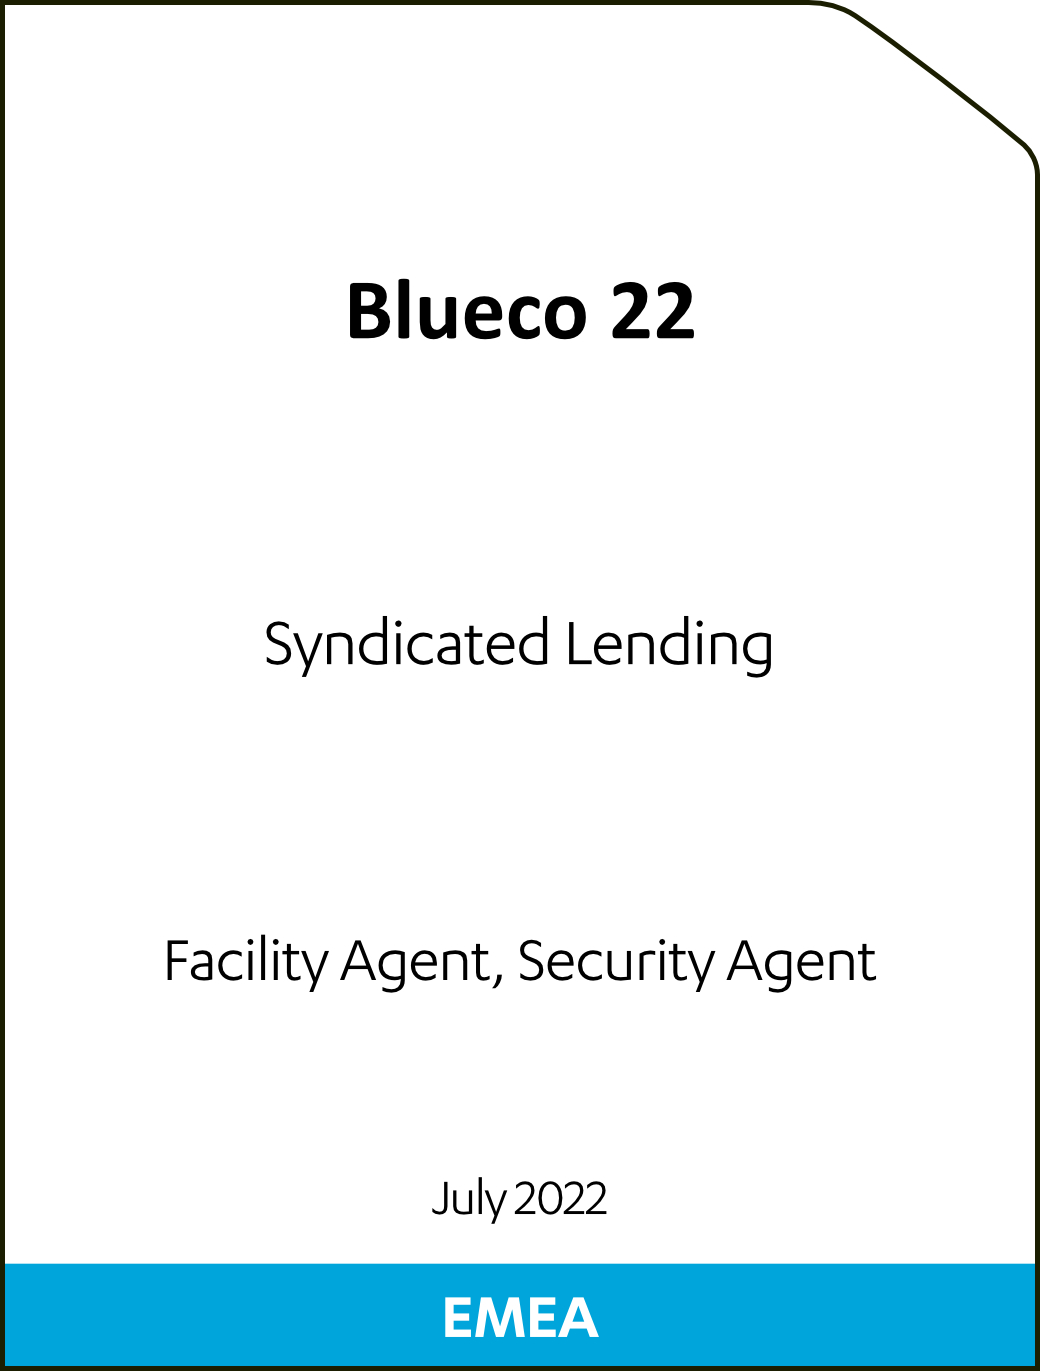 BlueCo22